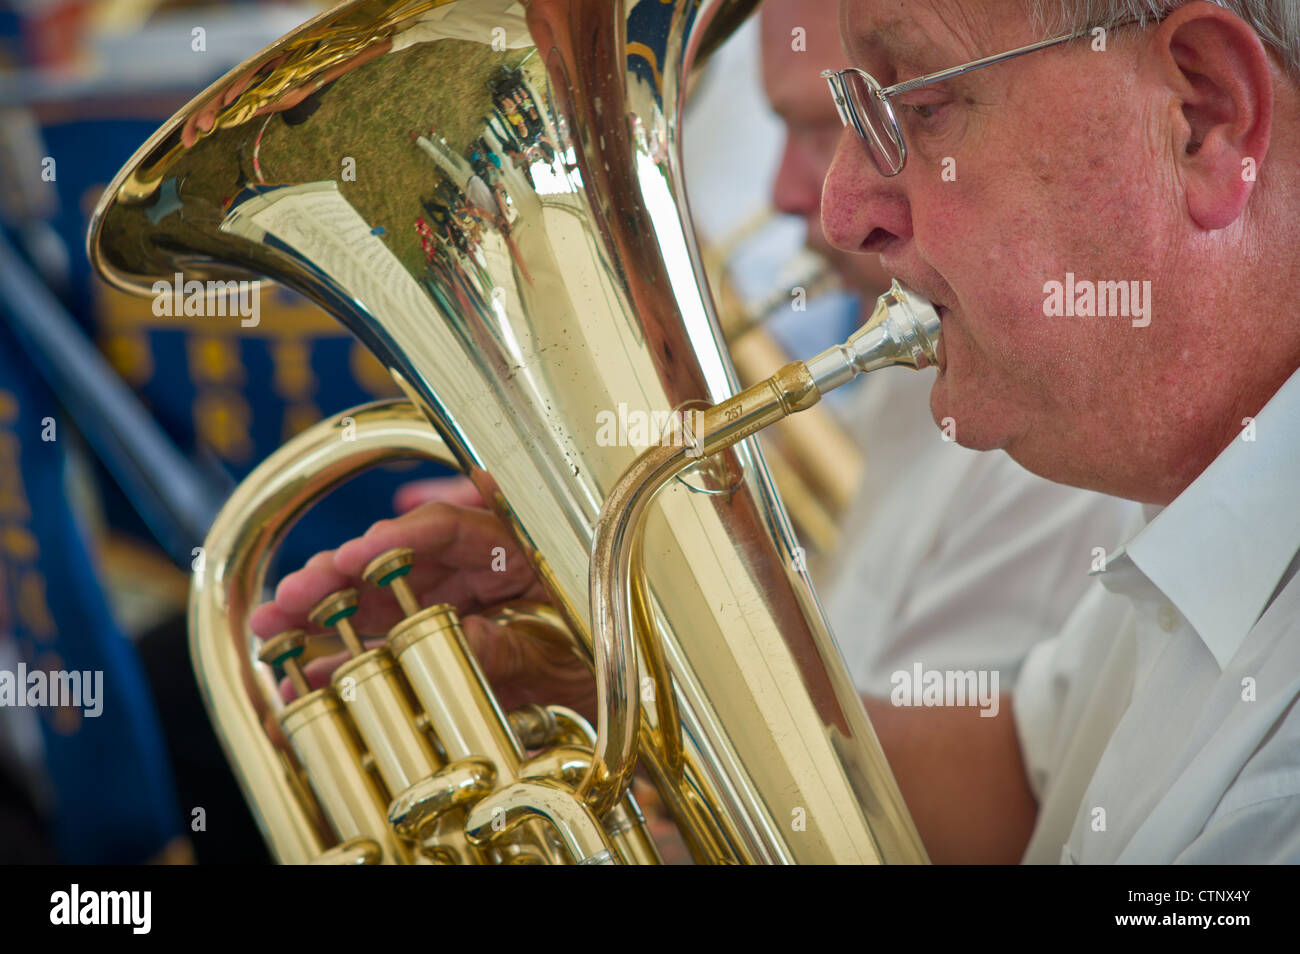 Ibstock Brick Brass Band euphonium or tuba players Stock Photo